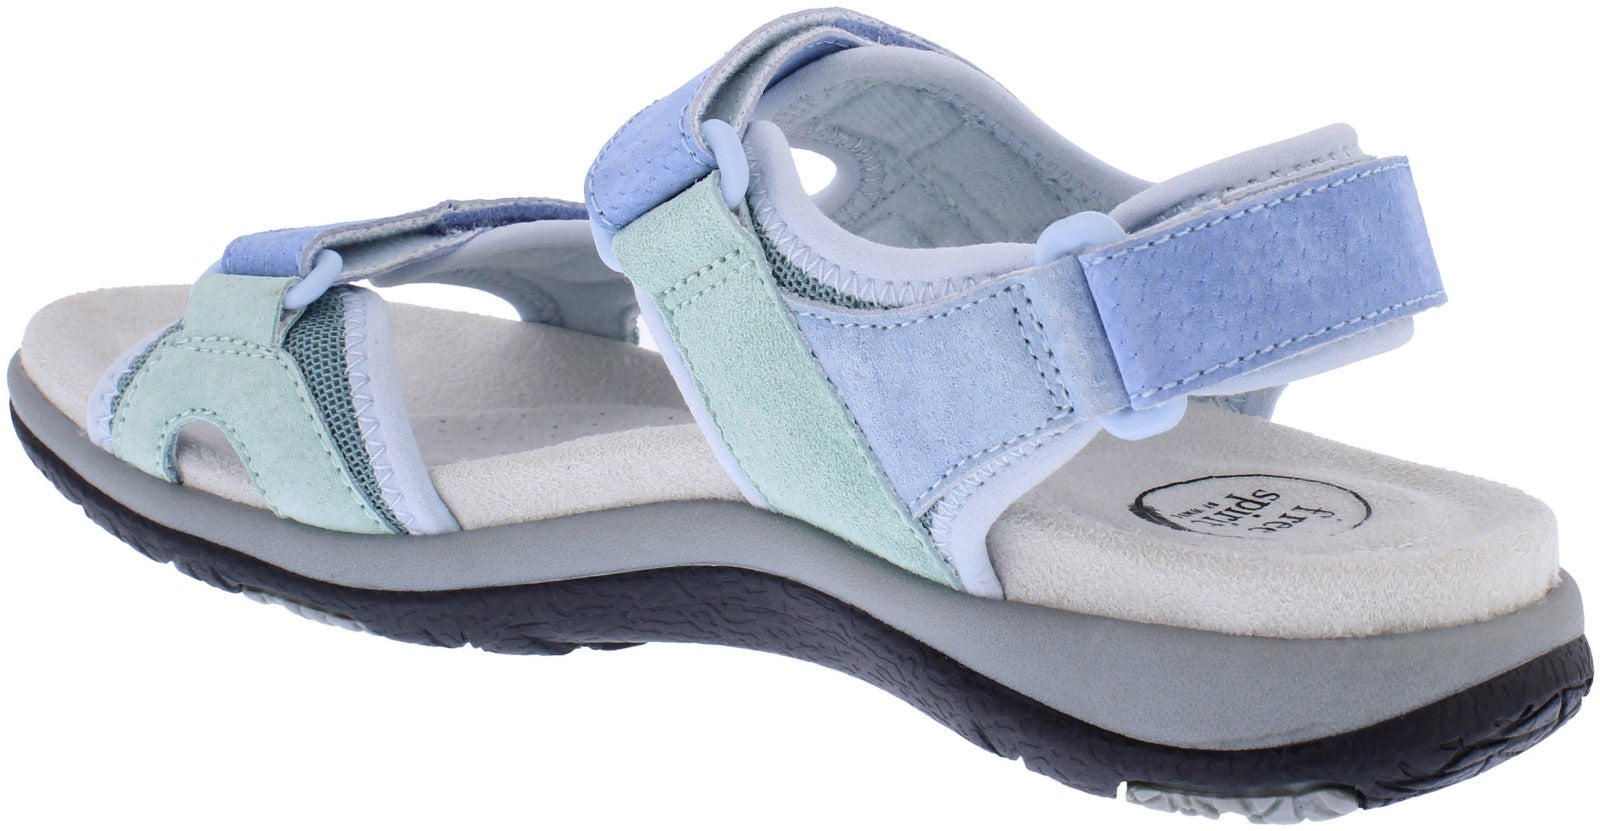 Free Spirit Zeal Ladies Blue Multi Suede & Textile Touch Fastening Sandals